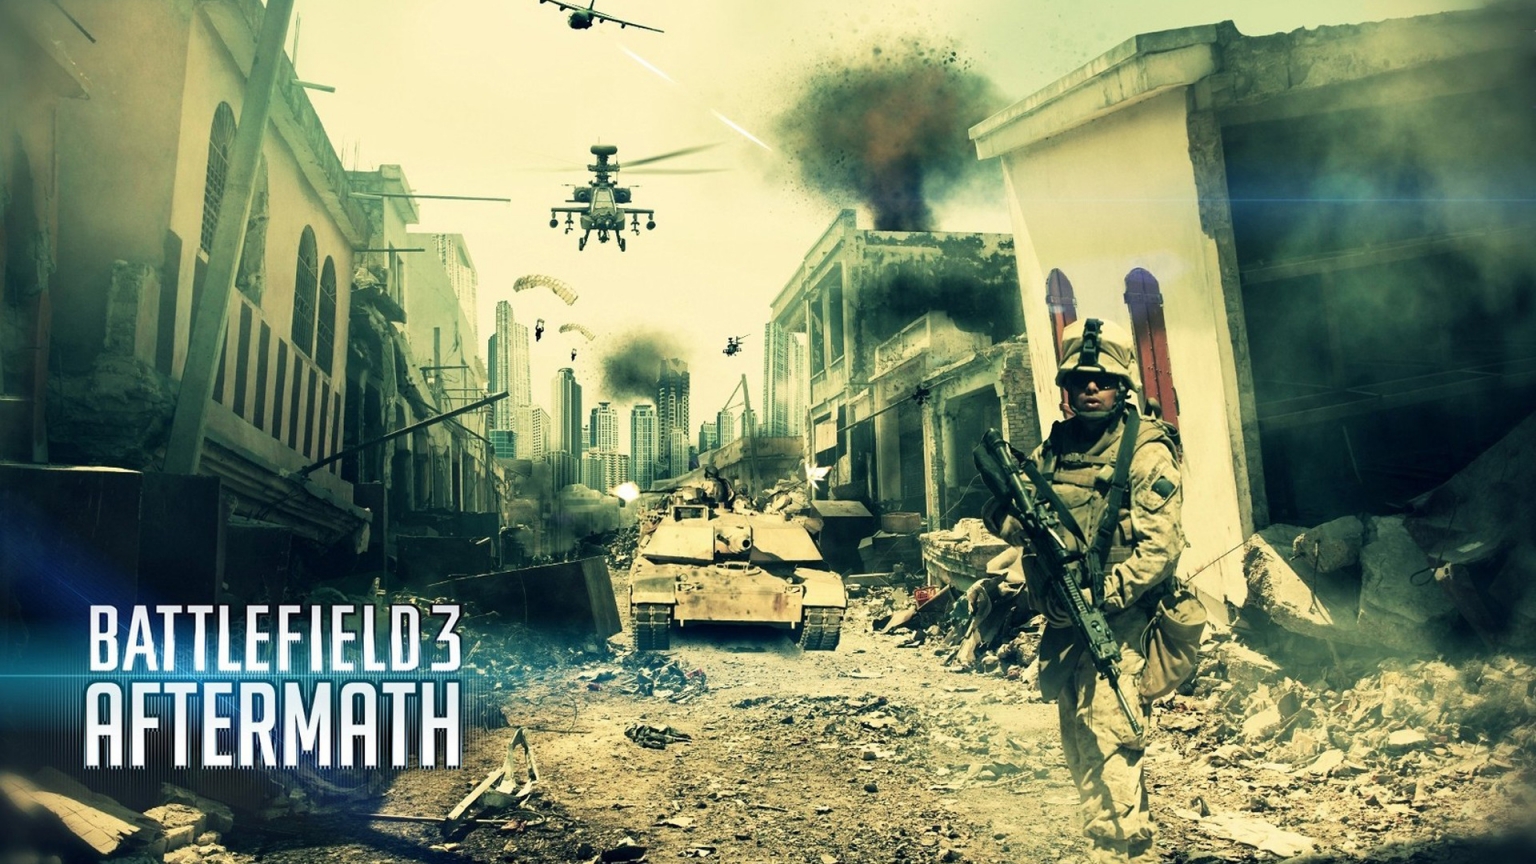 Battlefield 3 Aftermath for 1536 x 864 HDTV resolution